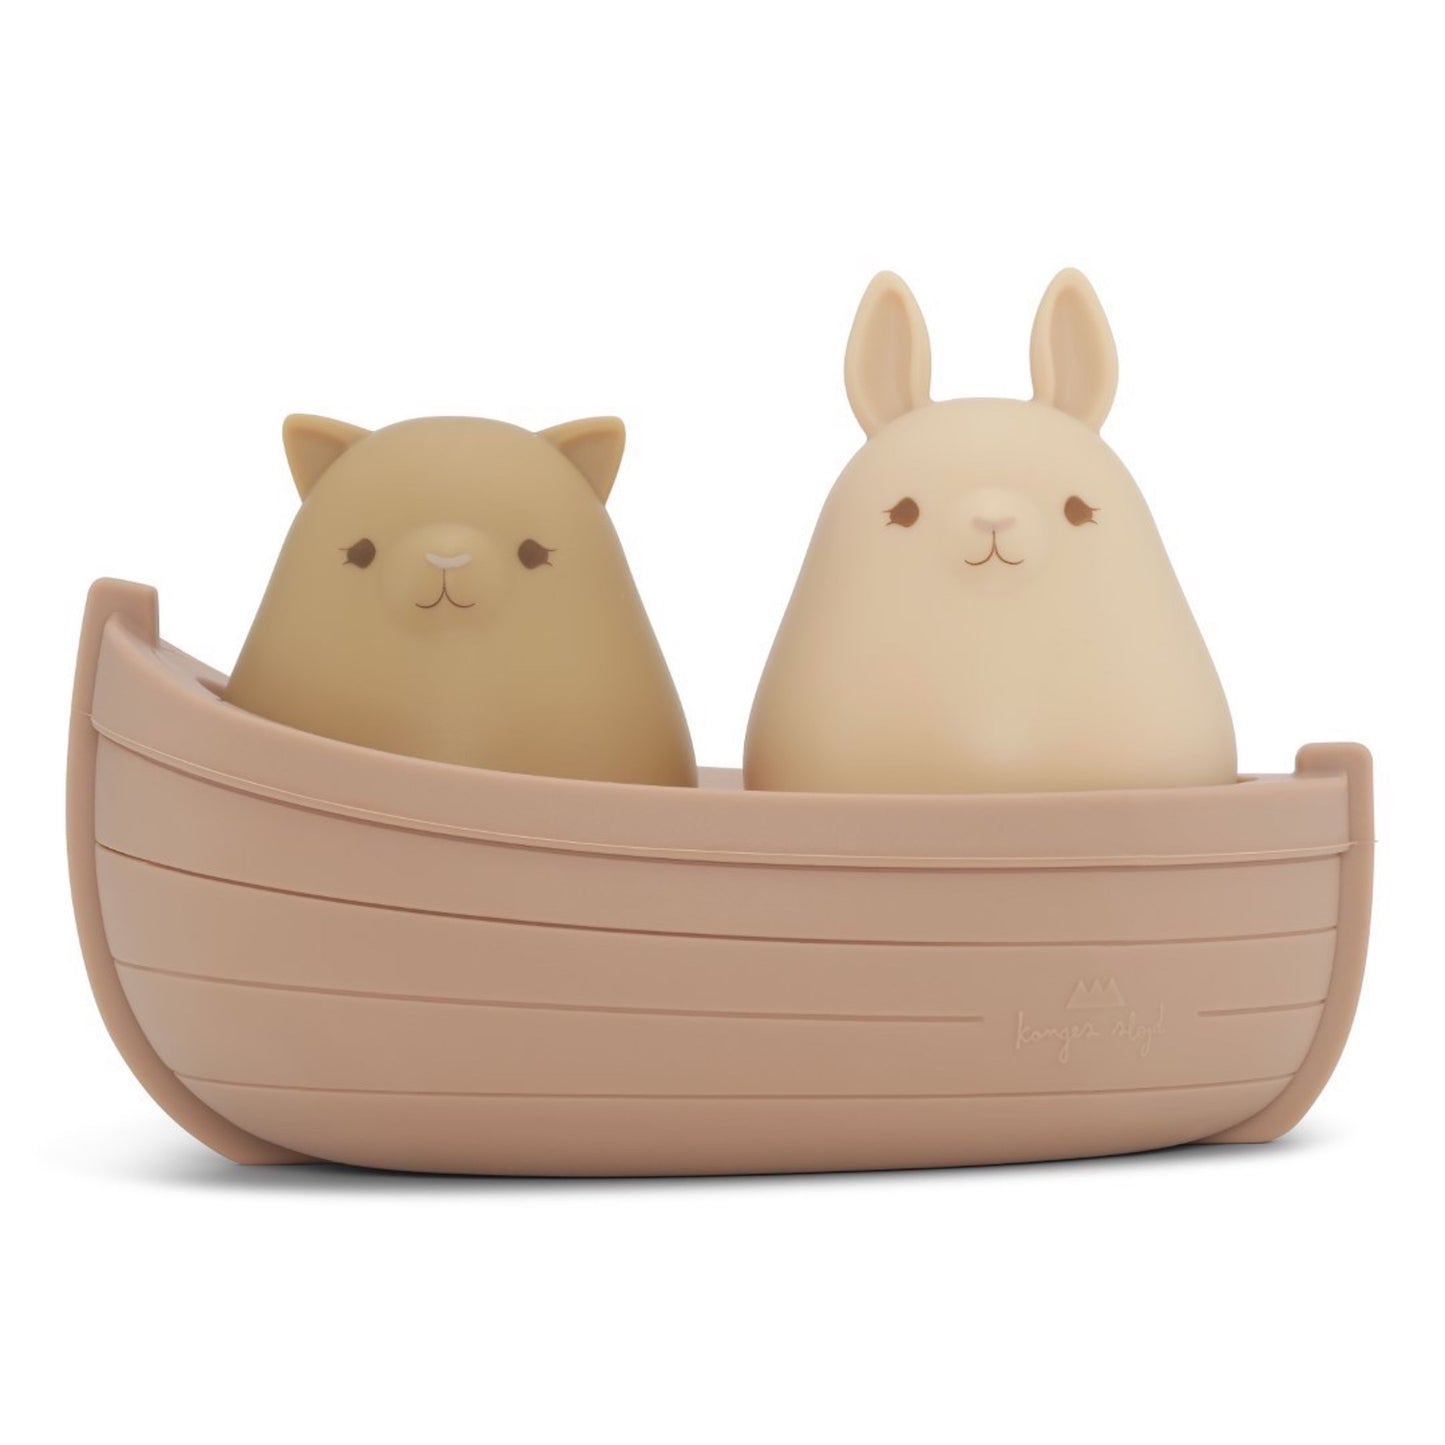 Silicone boat toys - Blush